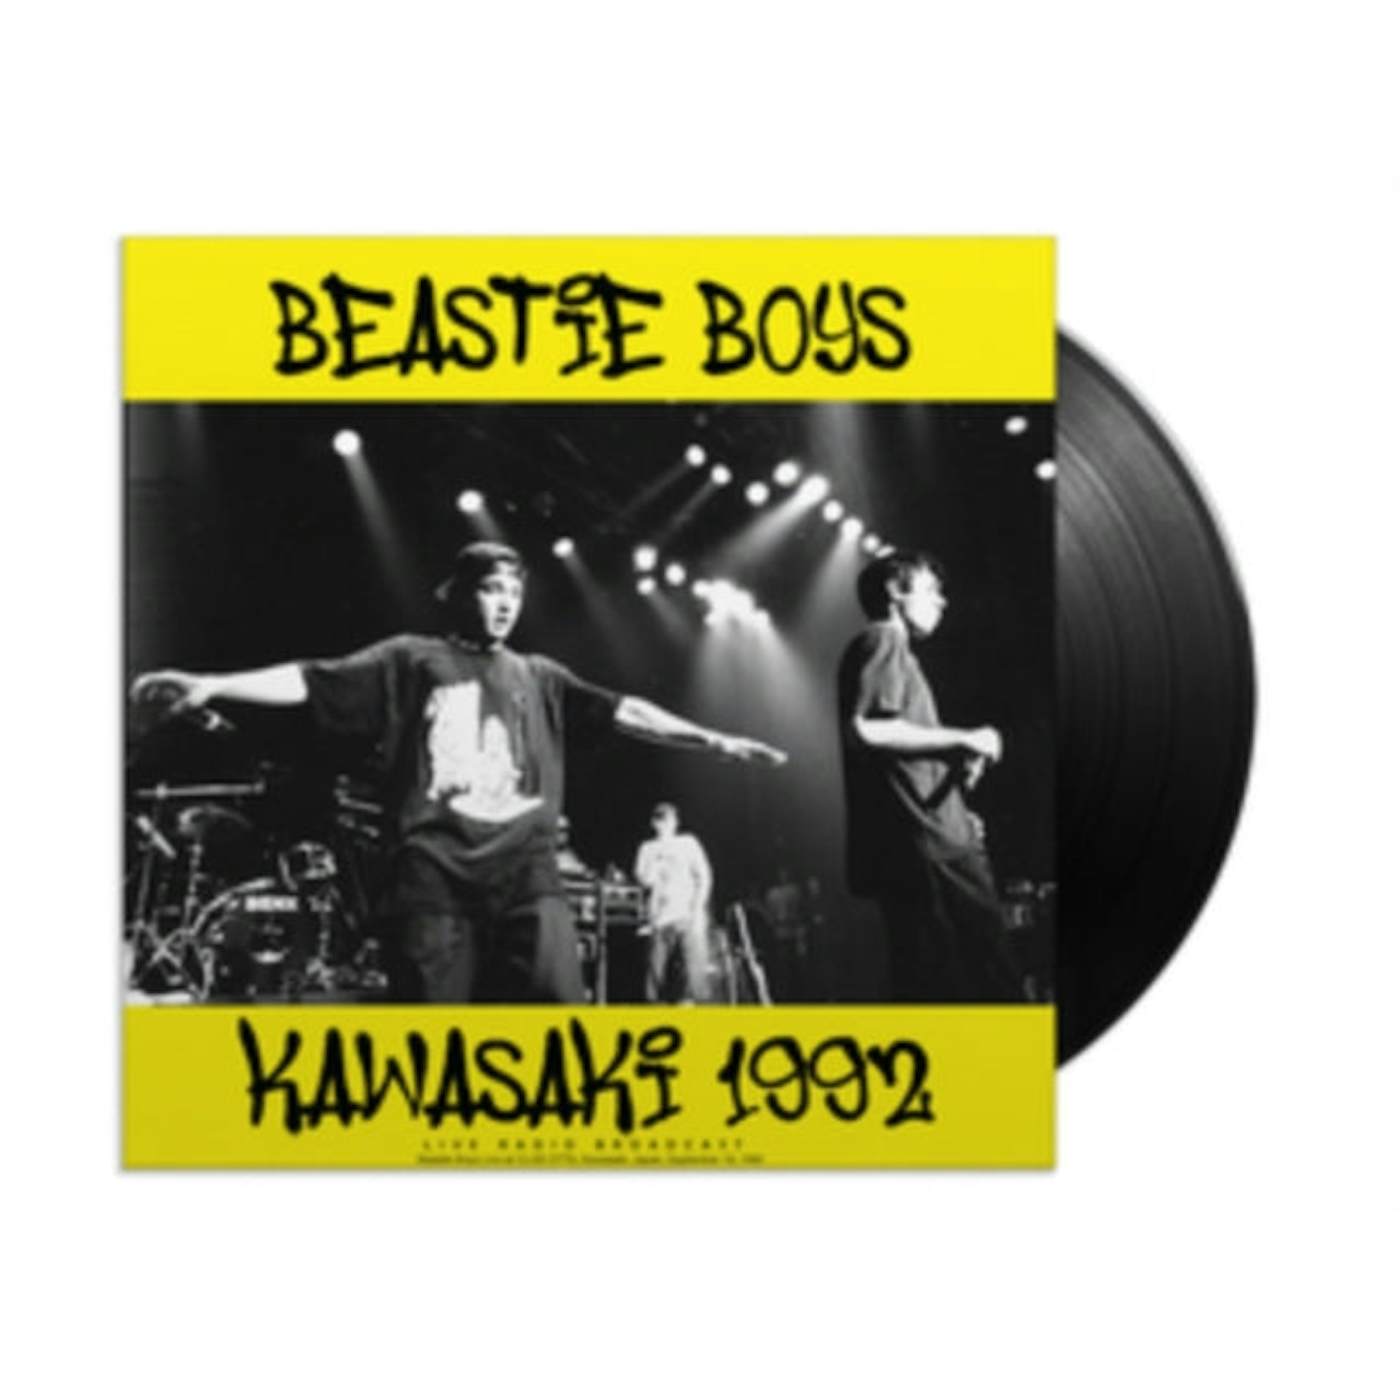  Beastie Boys LP - Kawasaki 1992 (Vinyl)